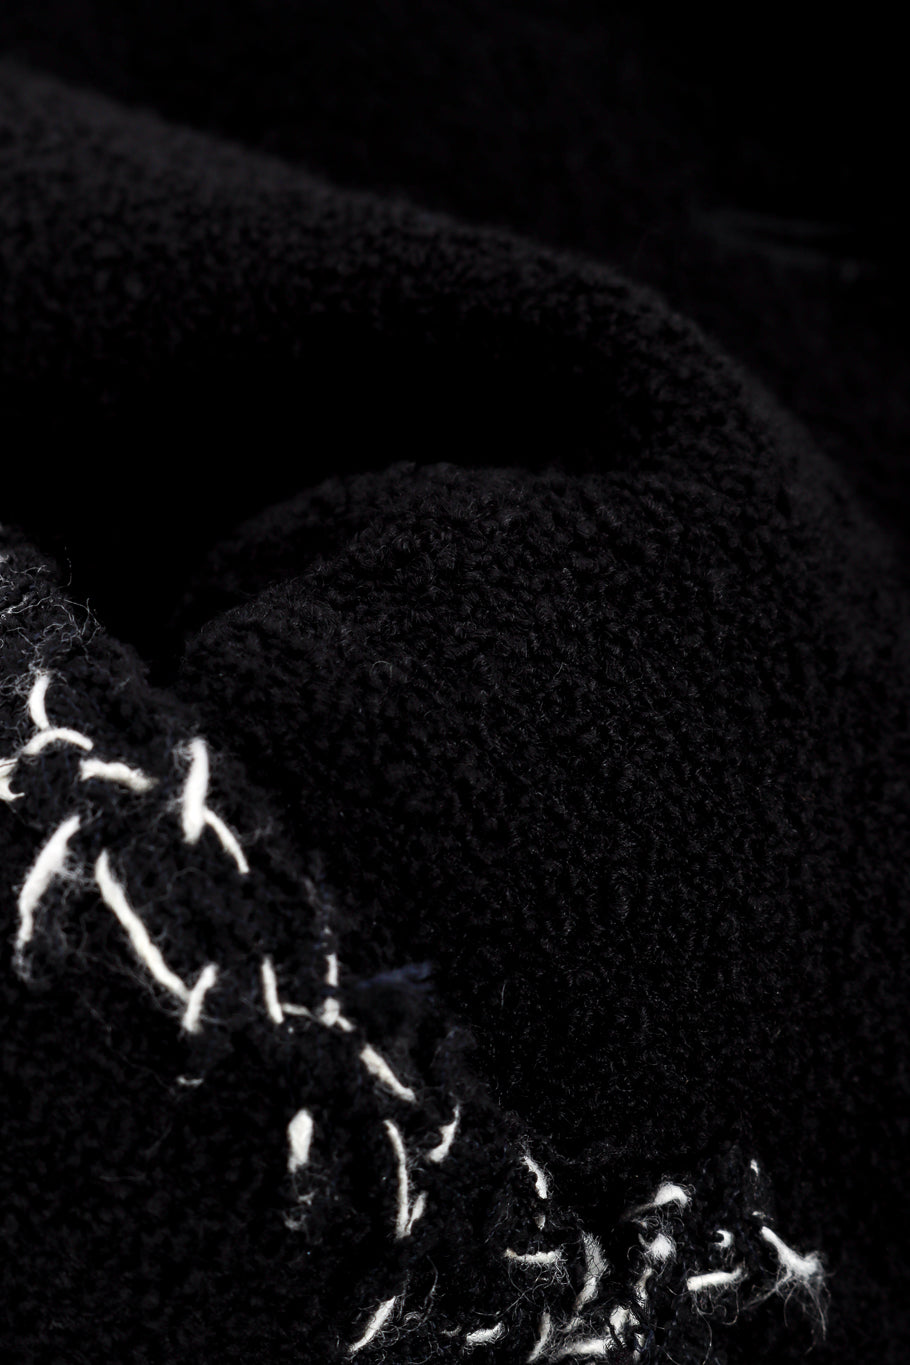 Chanel 2008 S Woven Stitch Trim Jacket fabric closeup @recessla